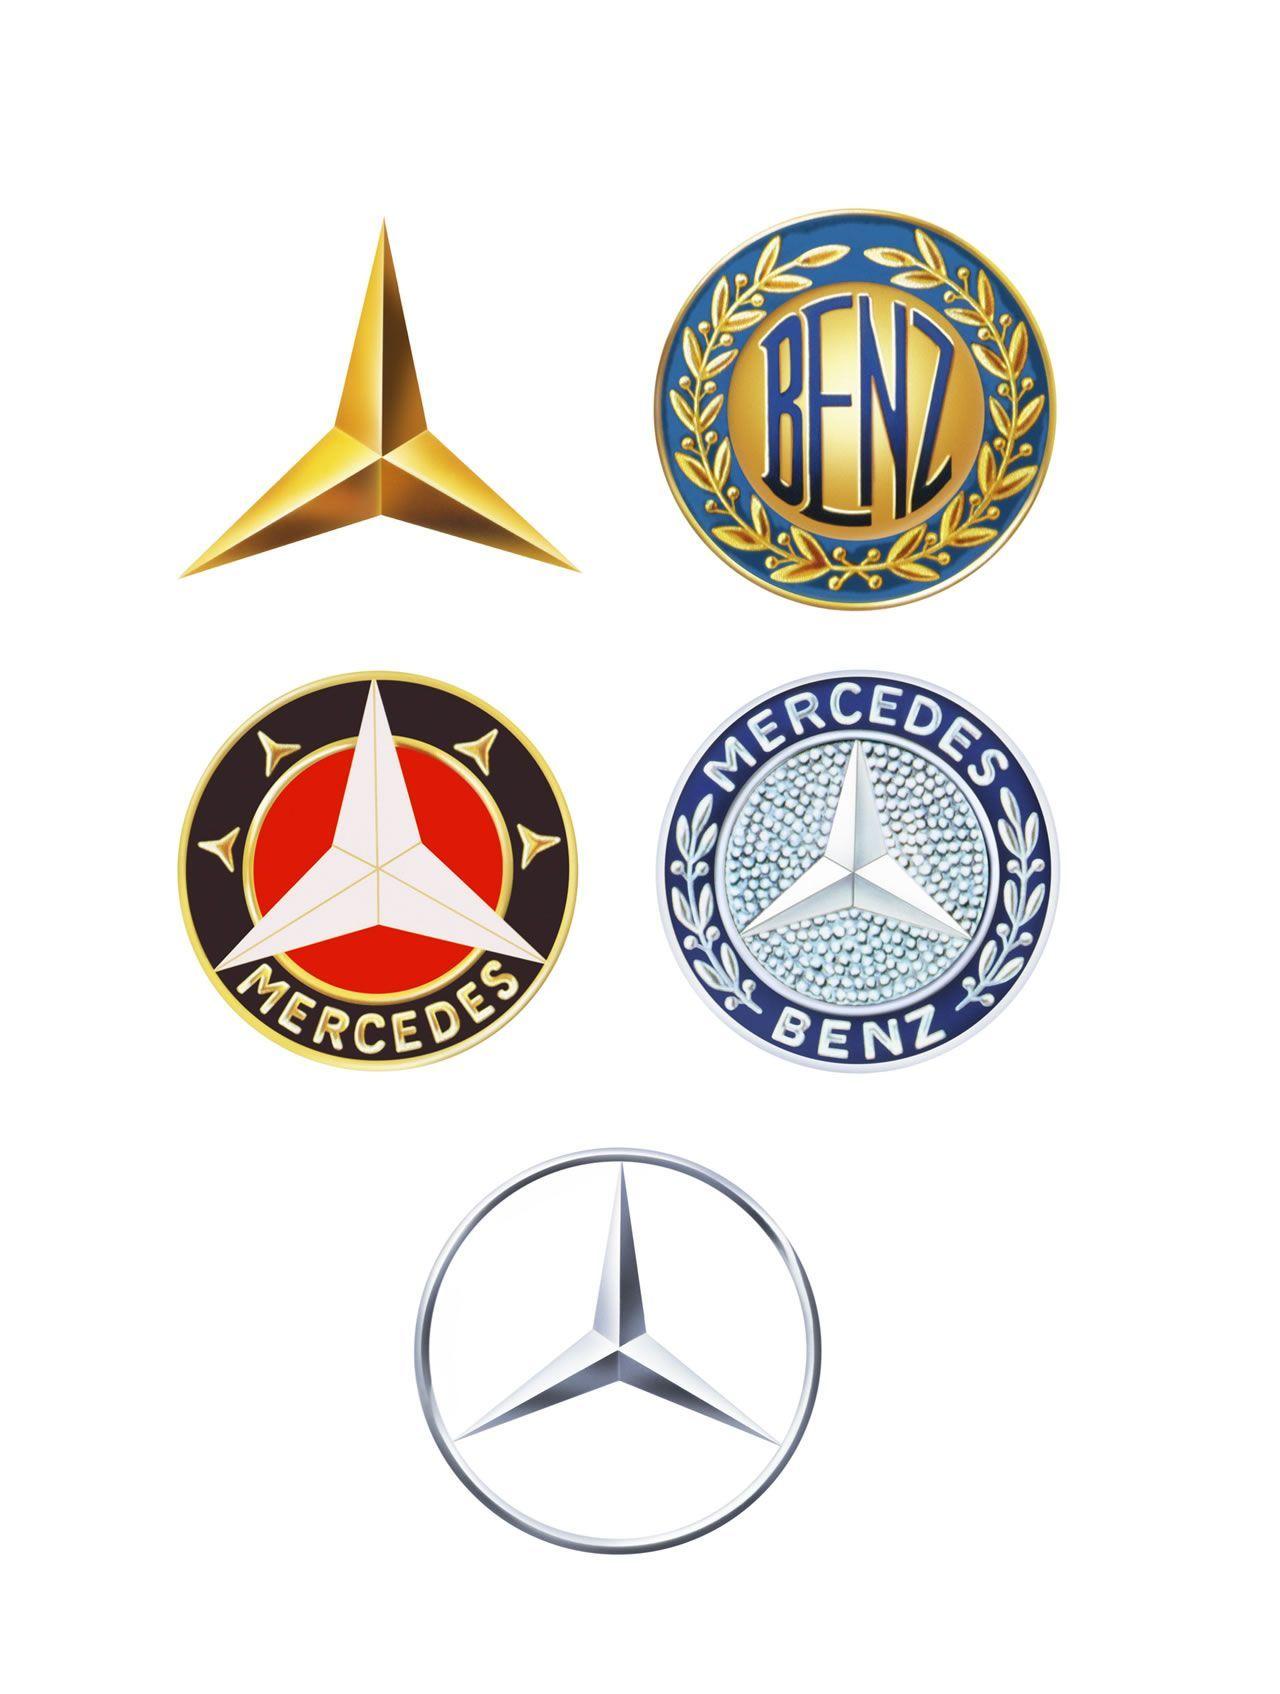 Old Benz Logo - Mercedes. Old Logos. Voiture mercedes, Voiture